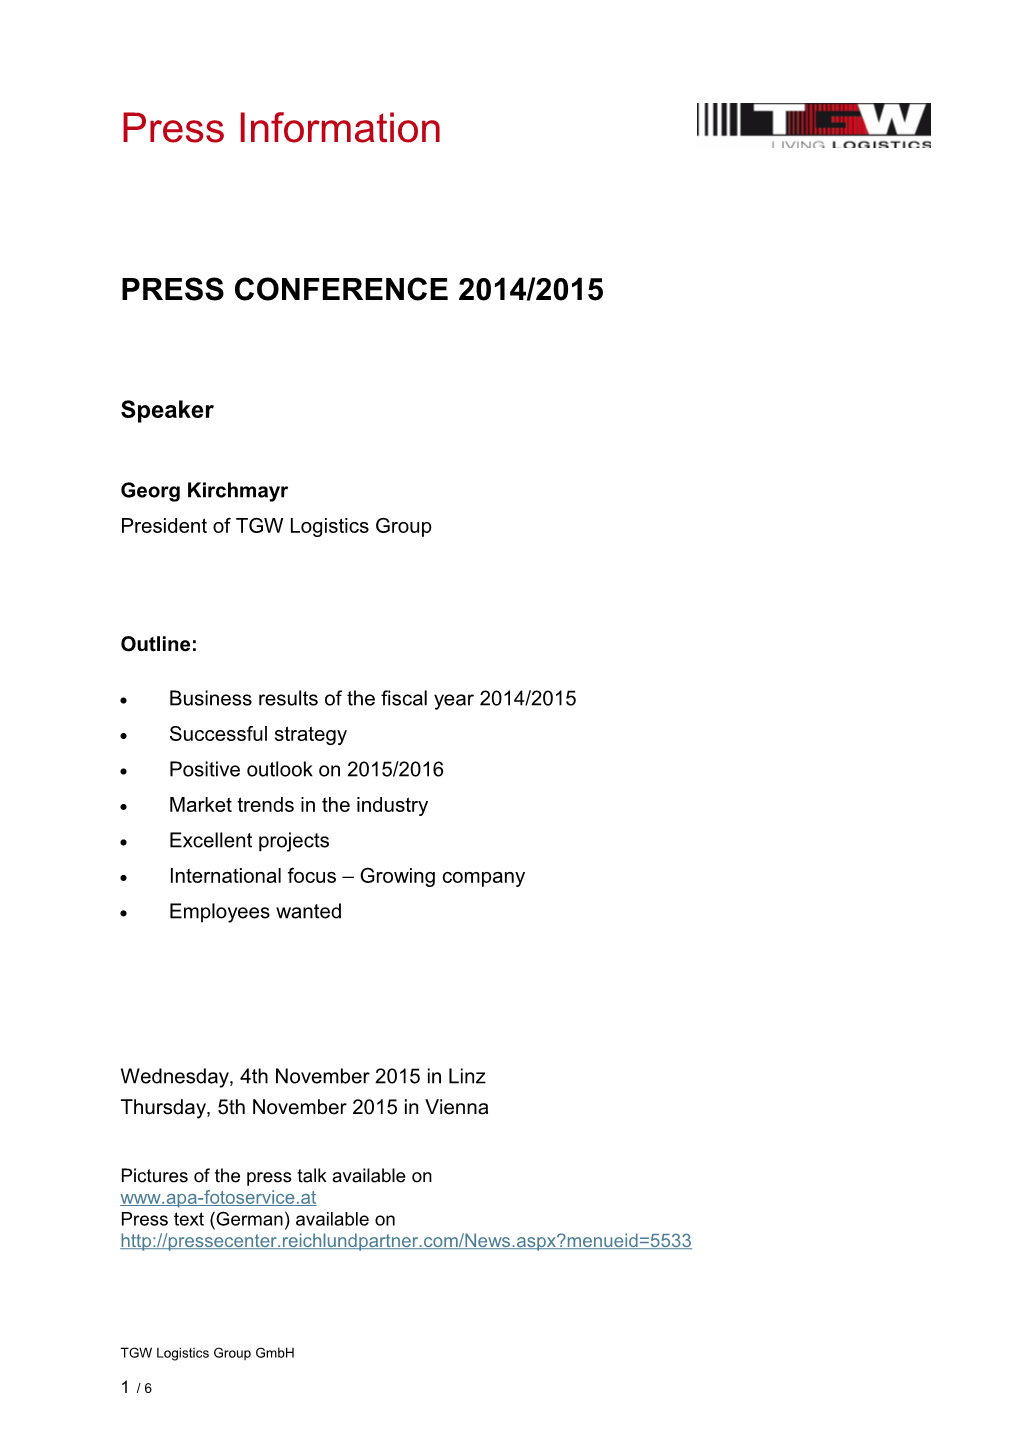 Press Conference 2014/2015